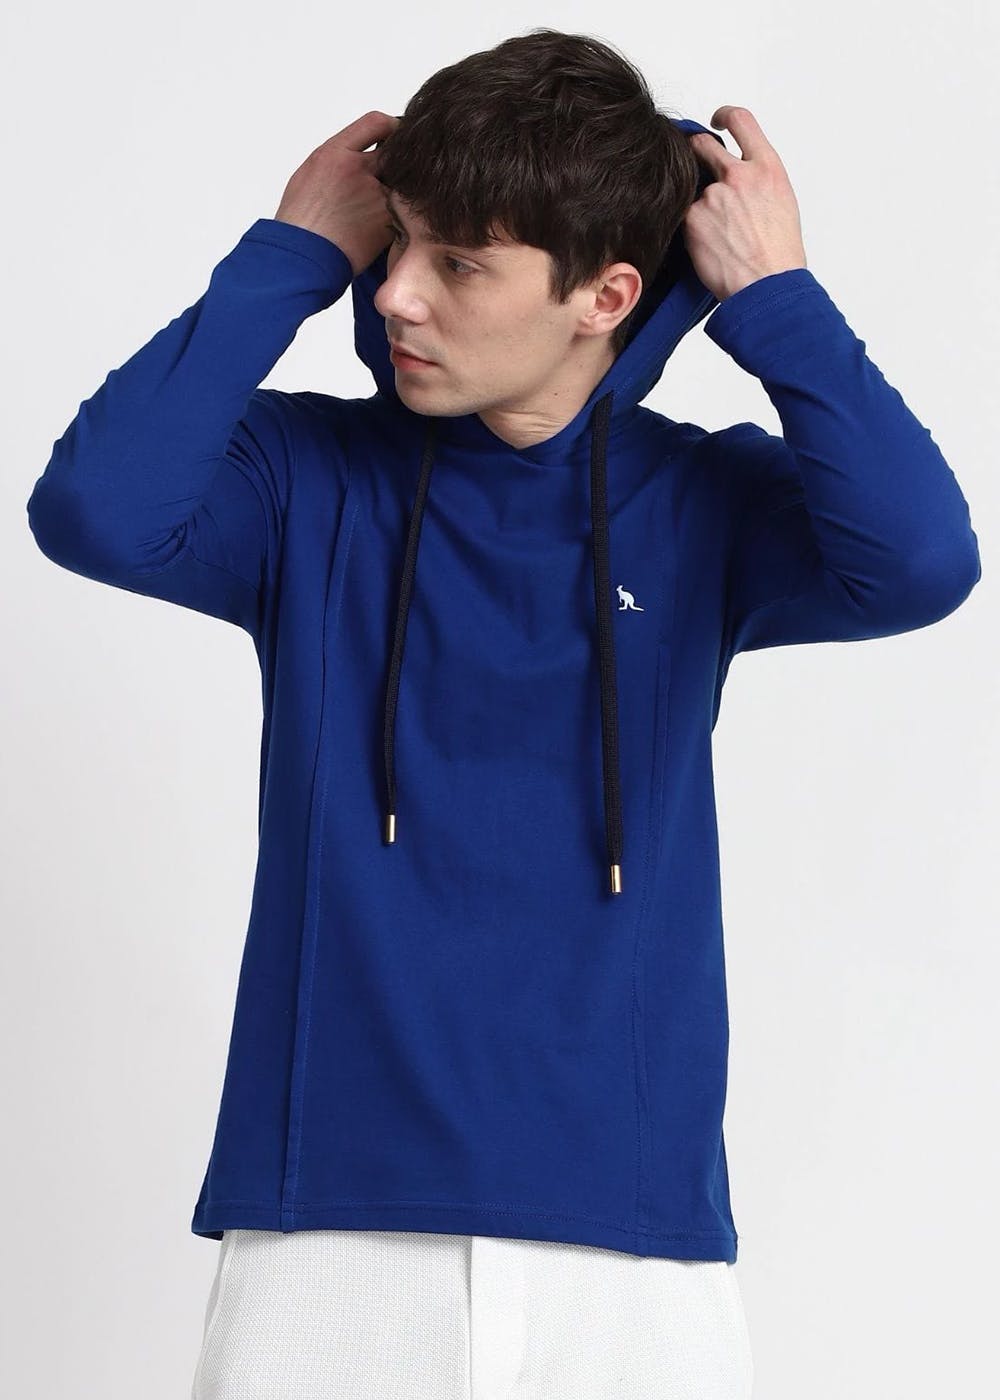 blue hooded t shirt